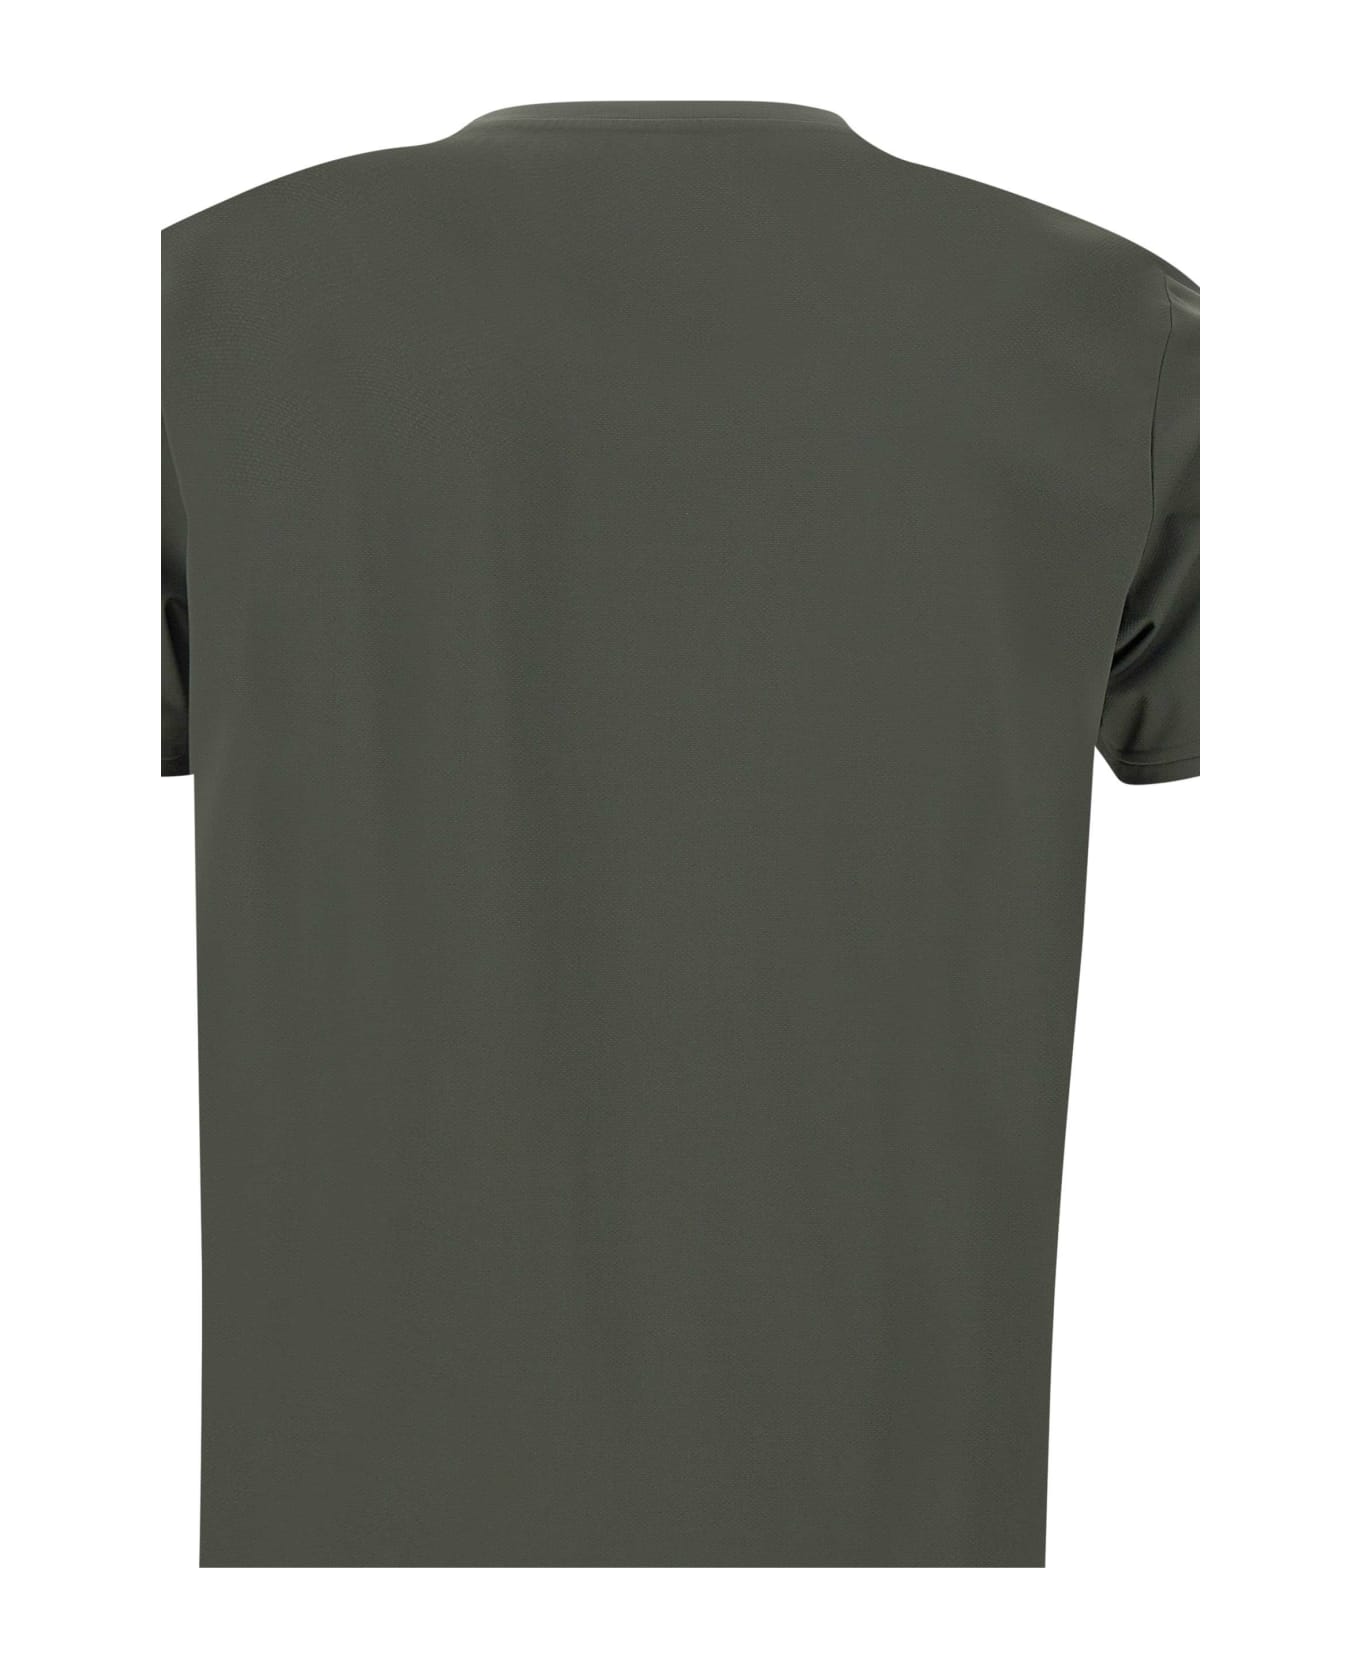 RRD - Roberto Ricci Design 'oxford Pocket Shirty' T-shirt - Bosco シャツ